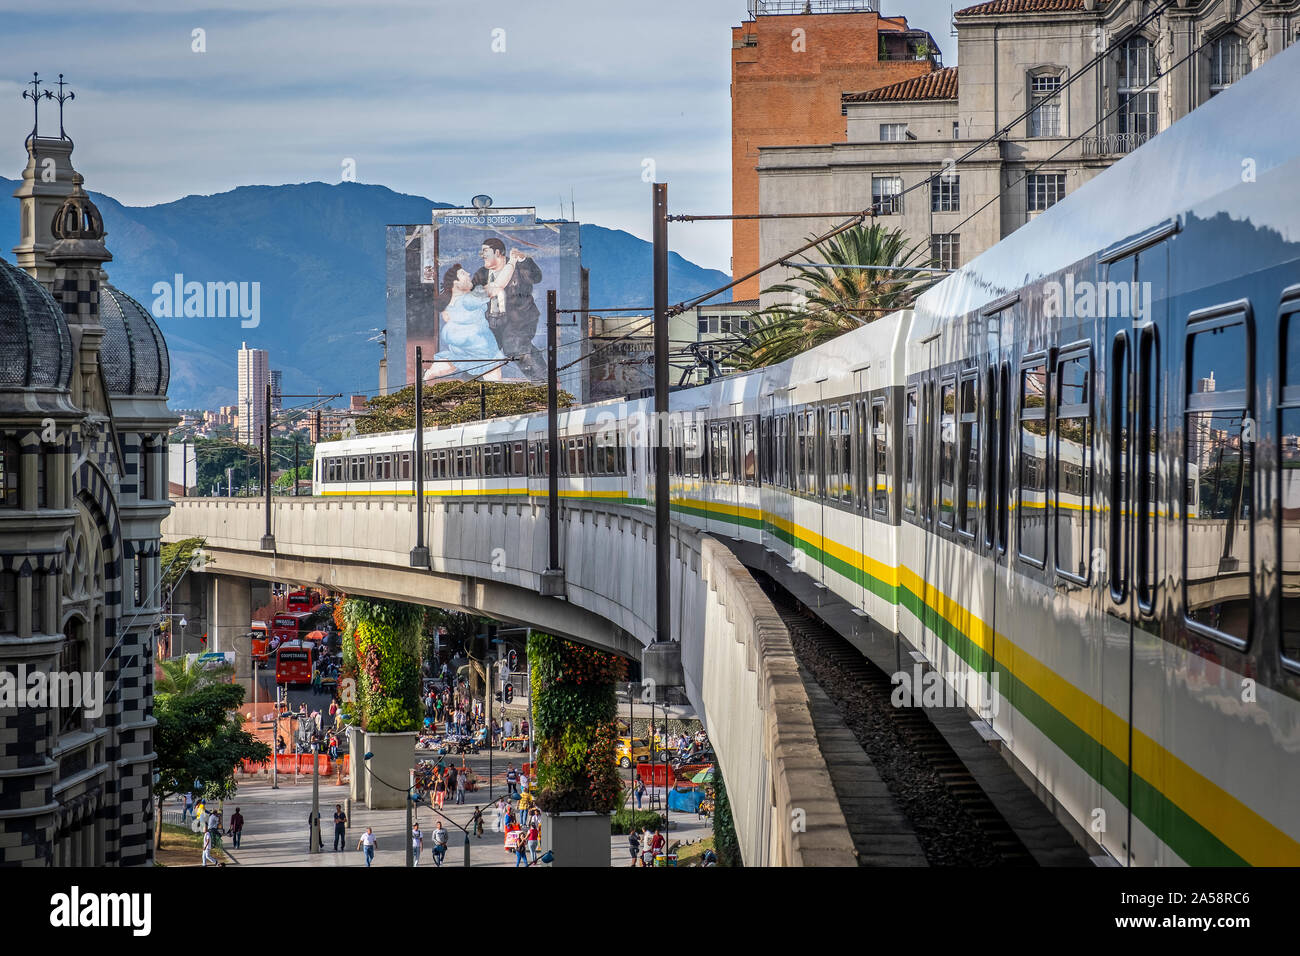 metro, subway, A line between Prado station and Hospital station, city center, skyline, Medellín, Colombia Stock Photo